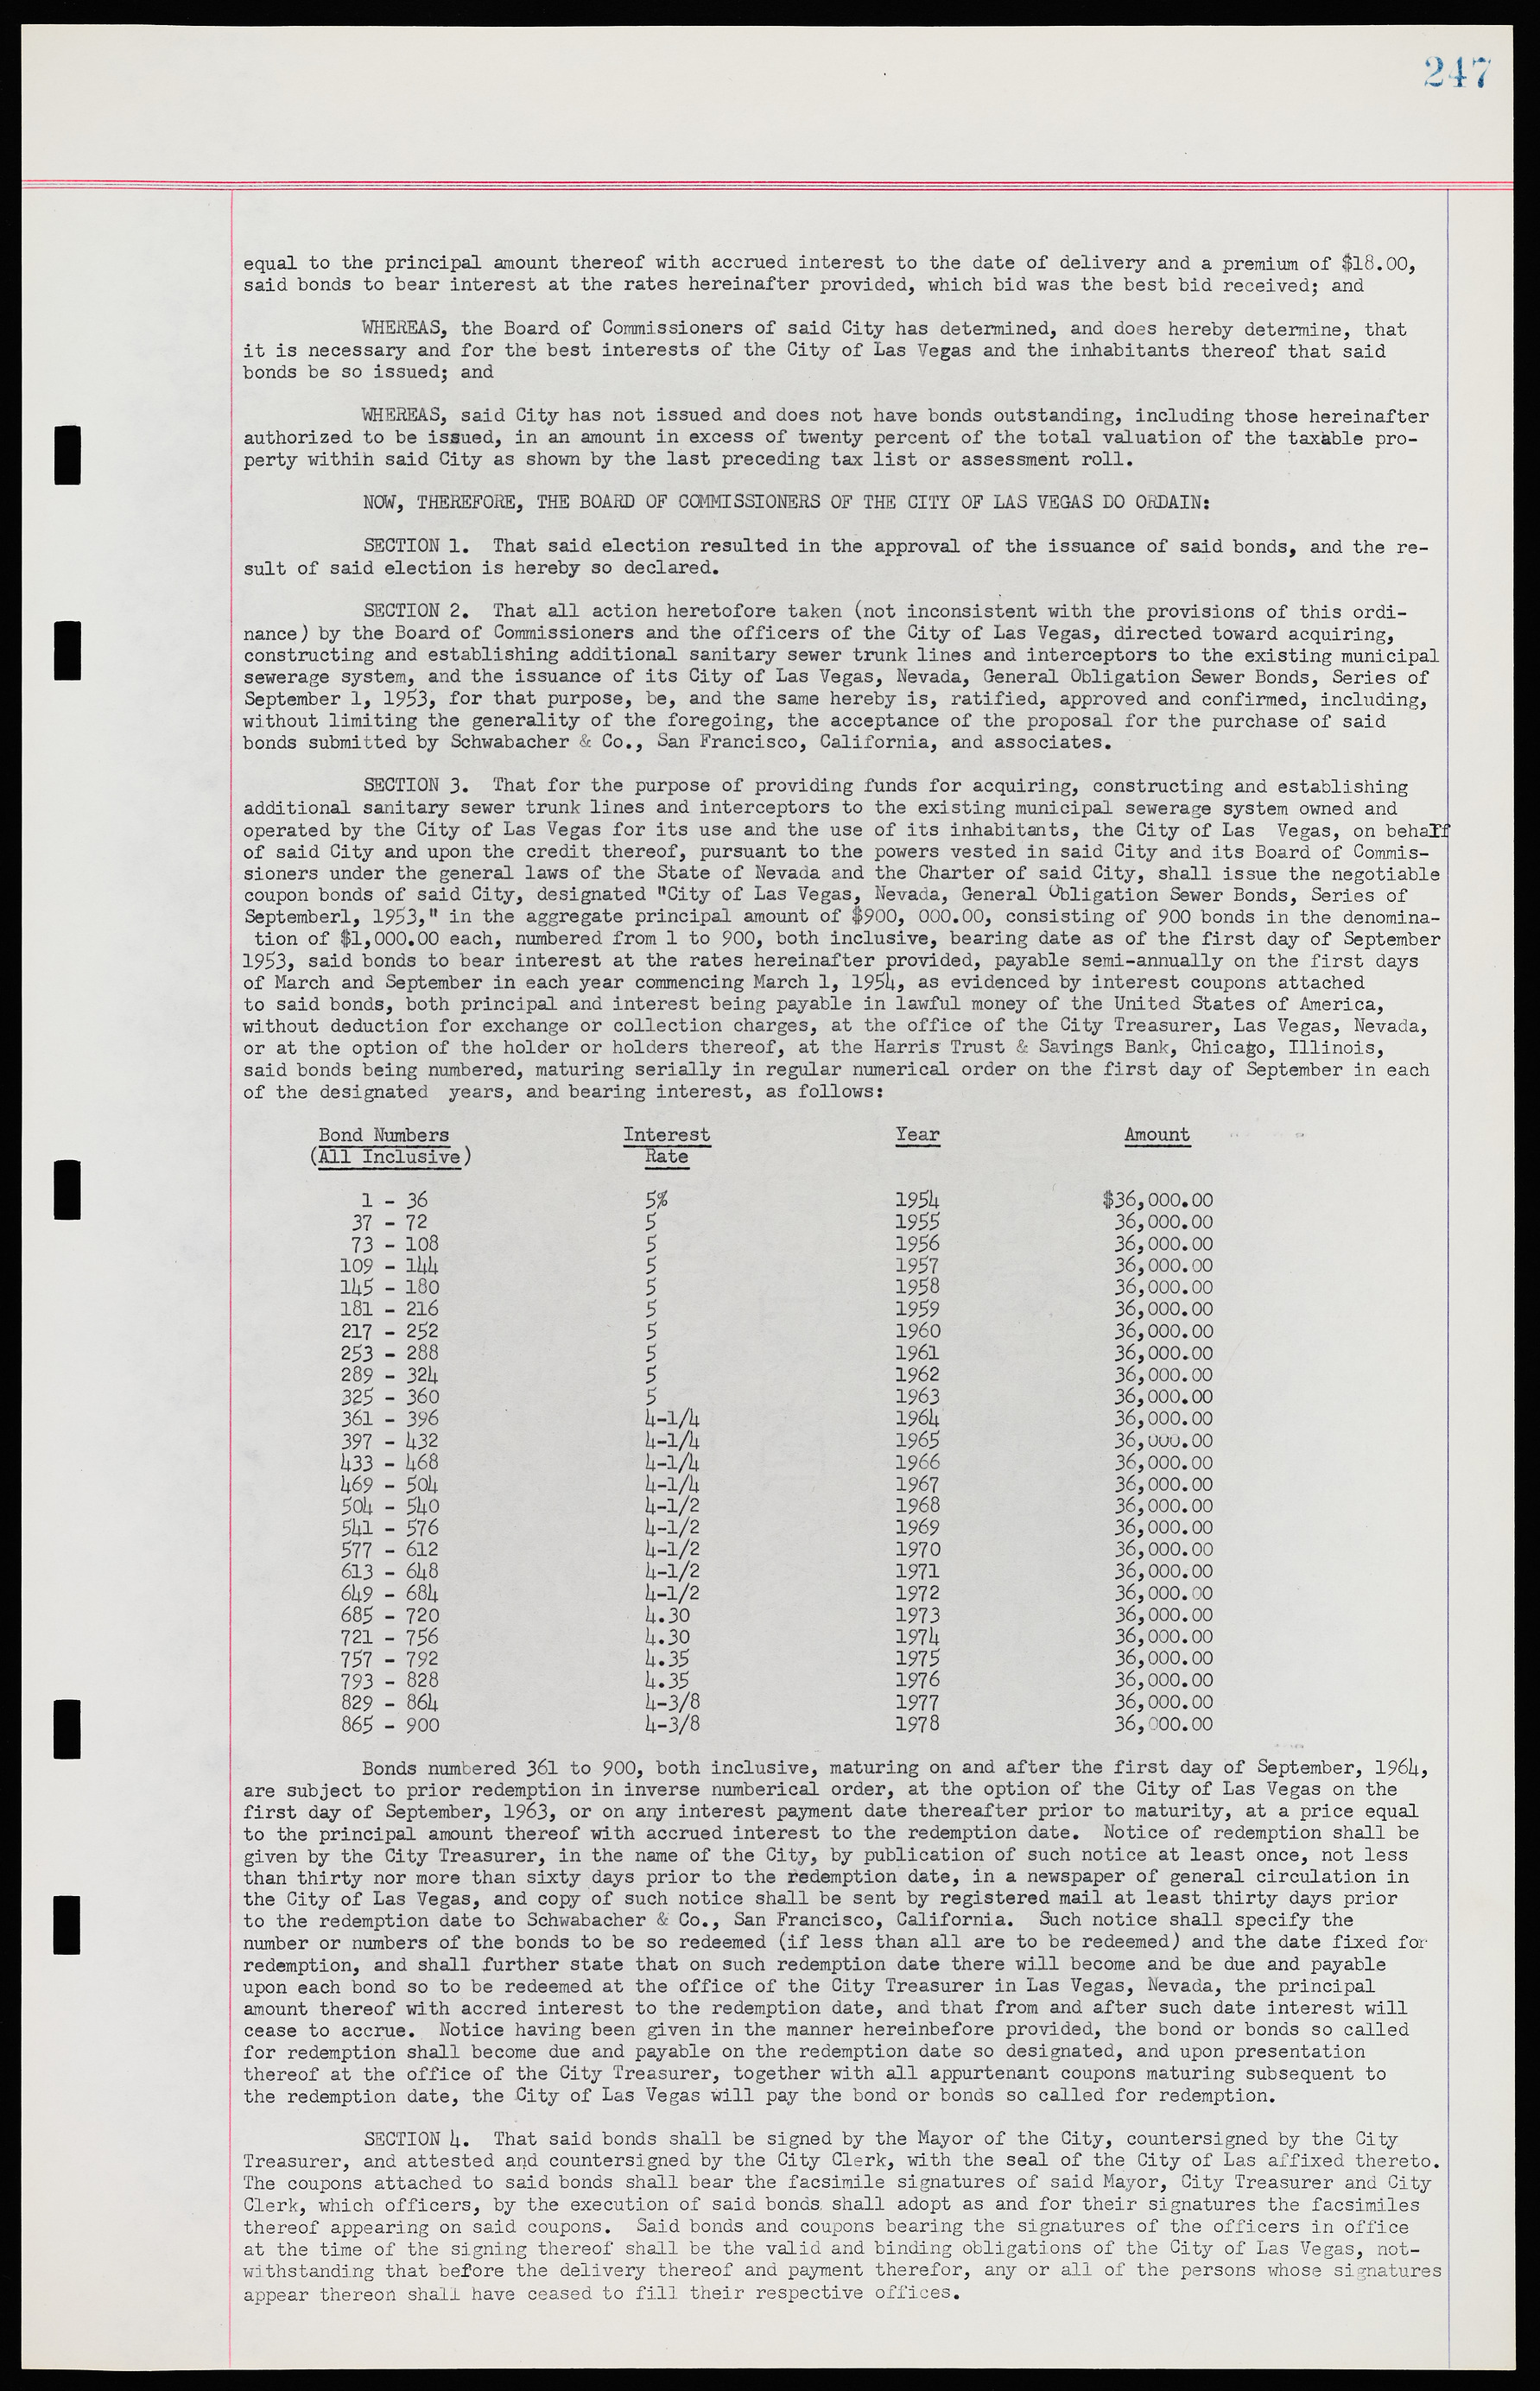 Las Vegas City Ordinances, November 13, 1950 to August 6, 1958, lvc000015-255